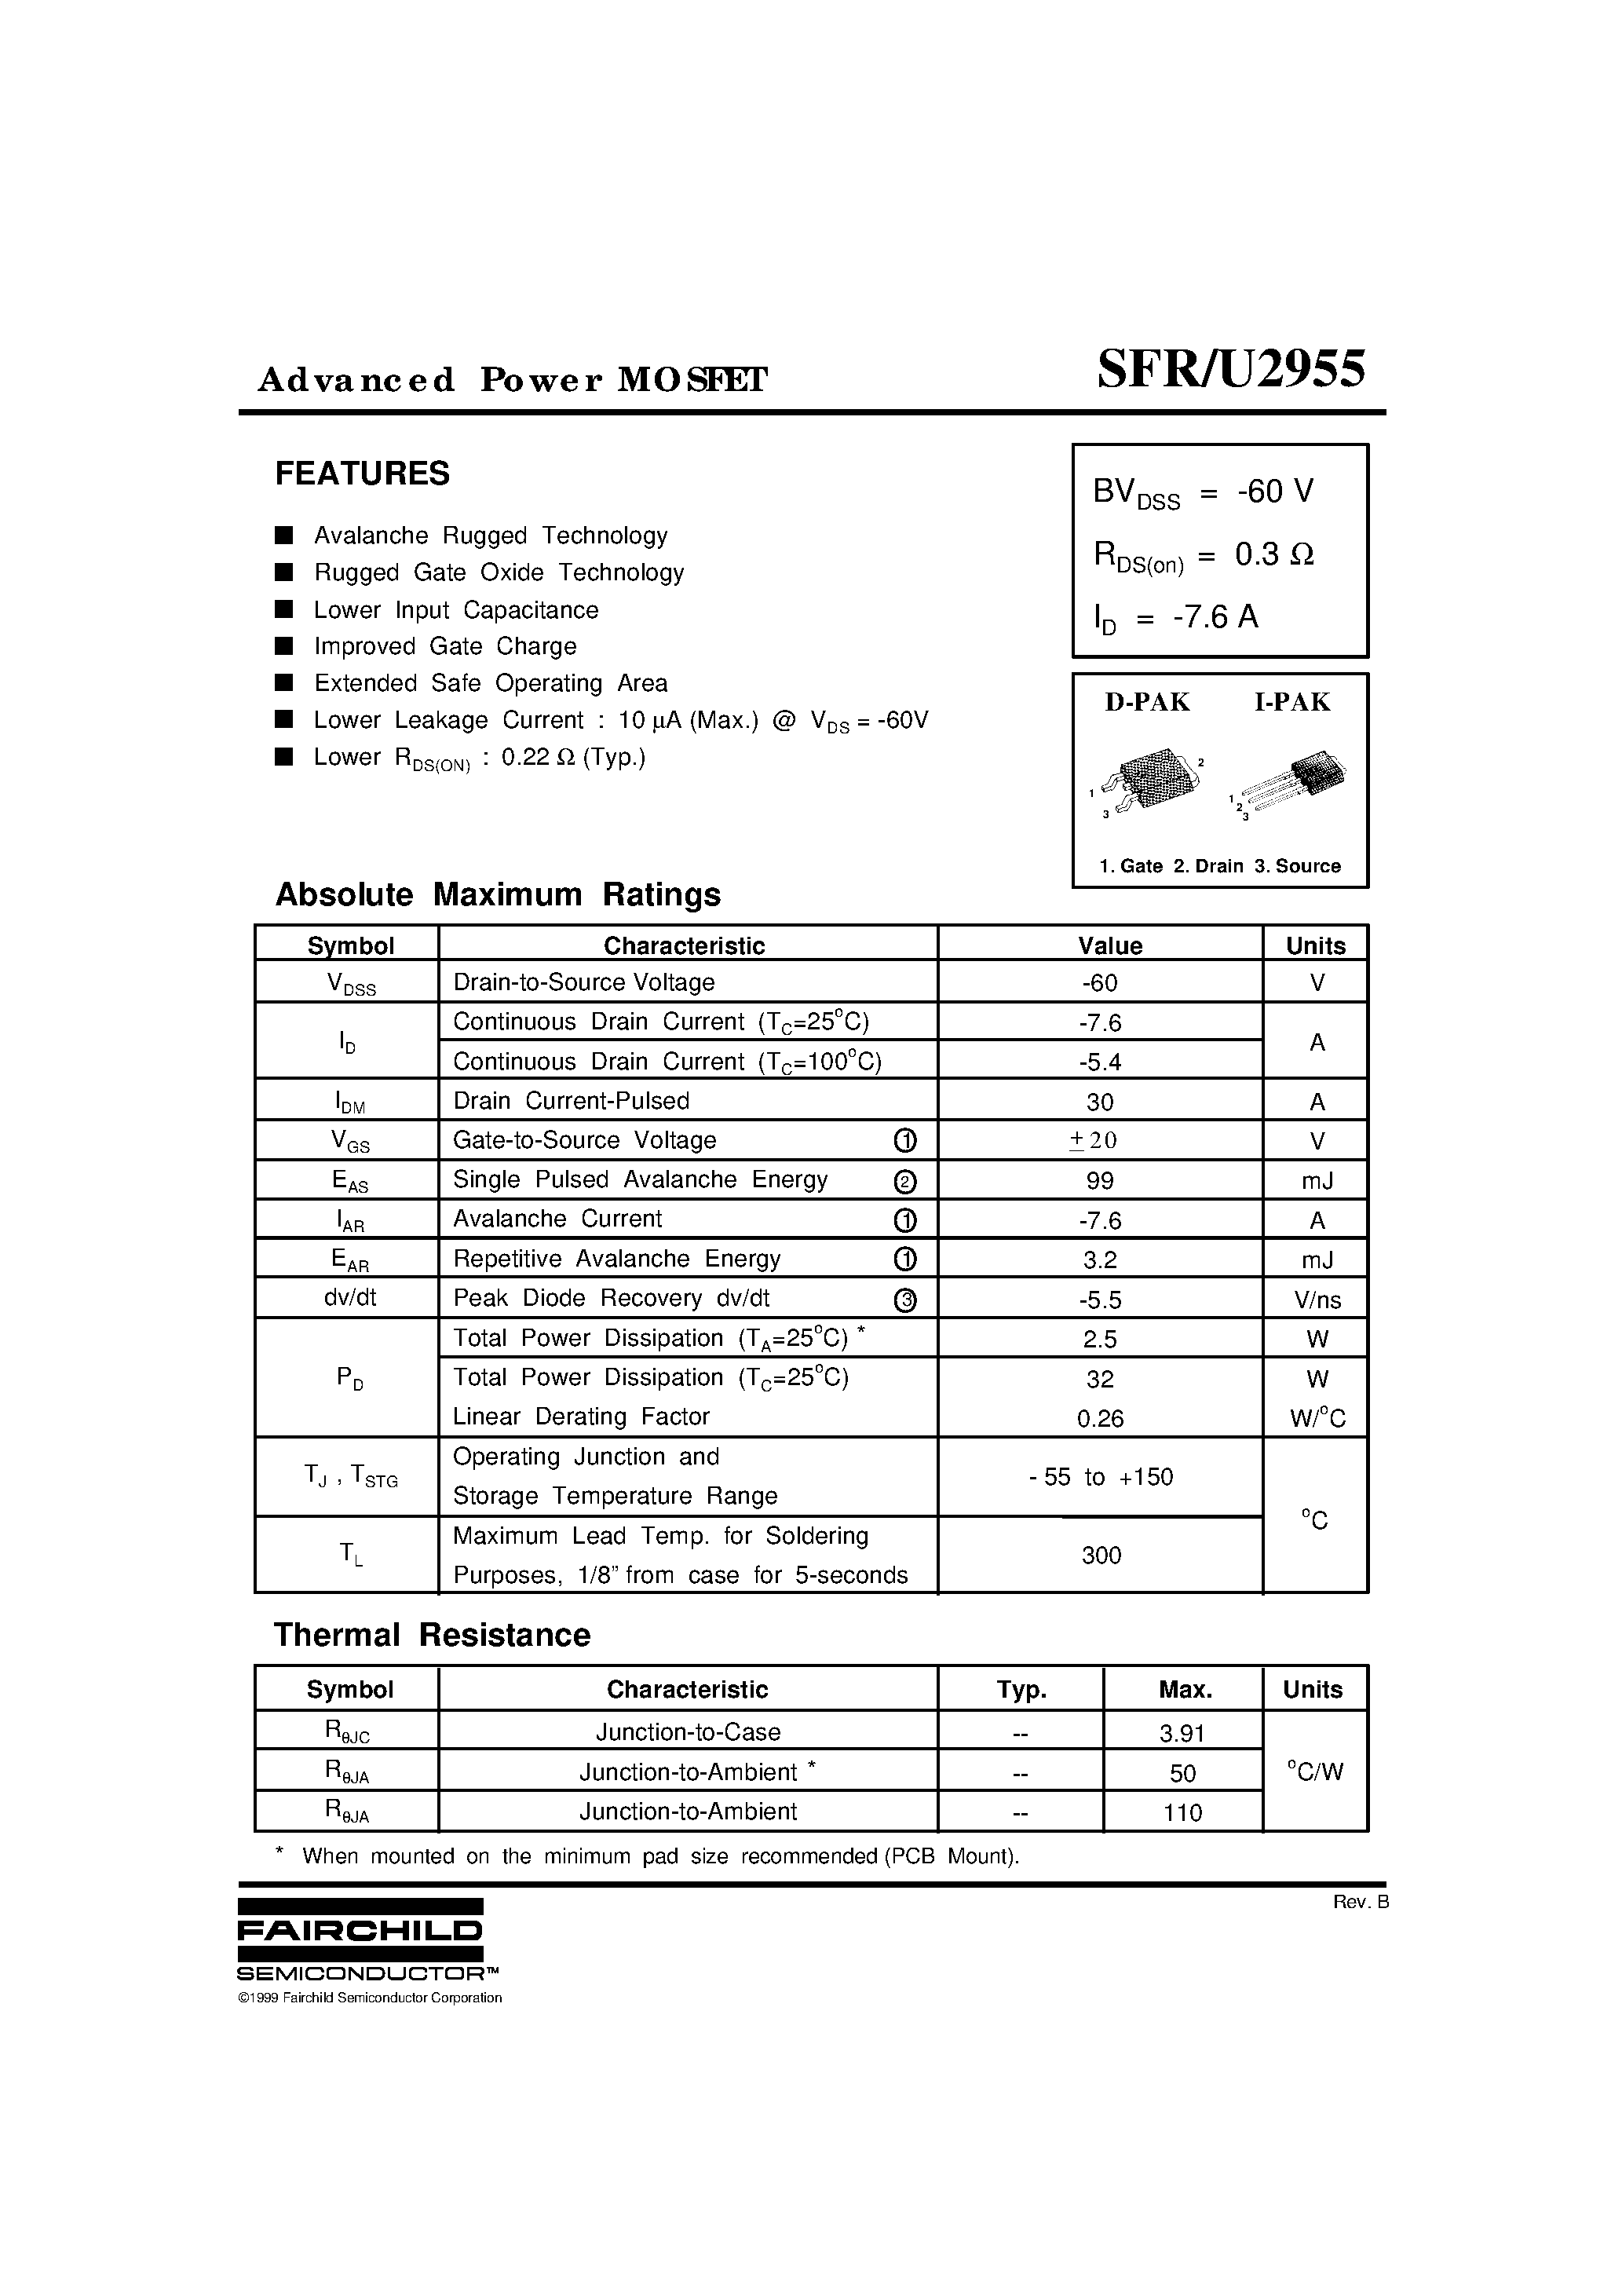 Datasheet SFRU2955 - Advanced Power MOSFET page 1